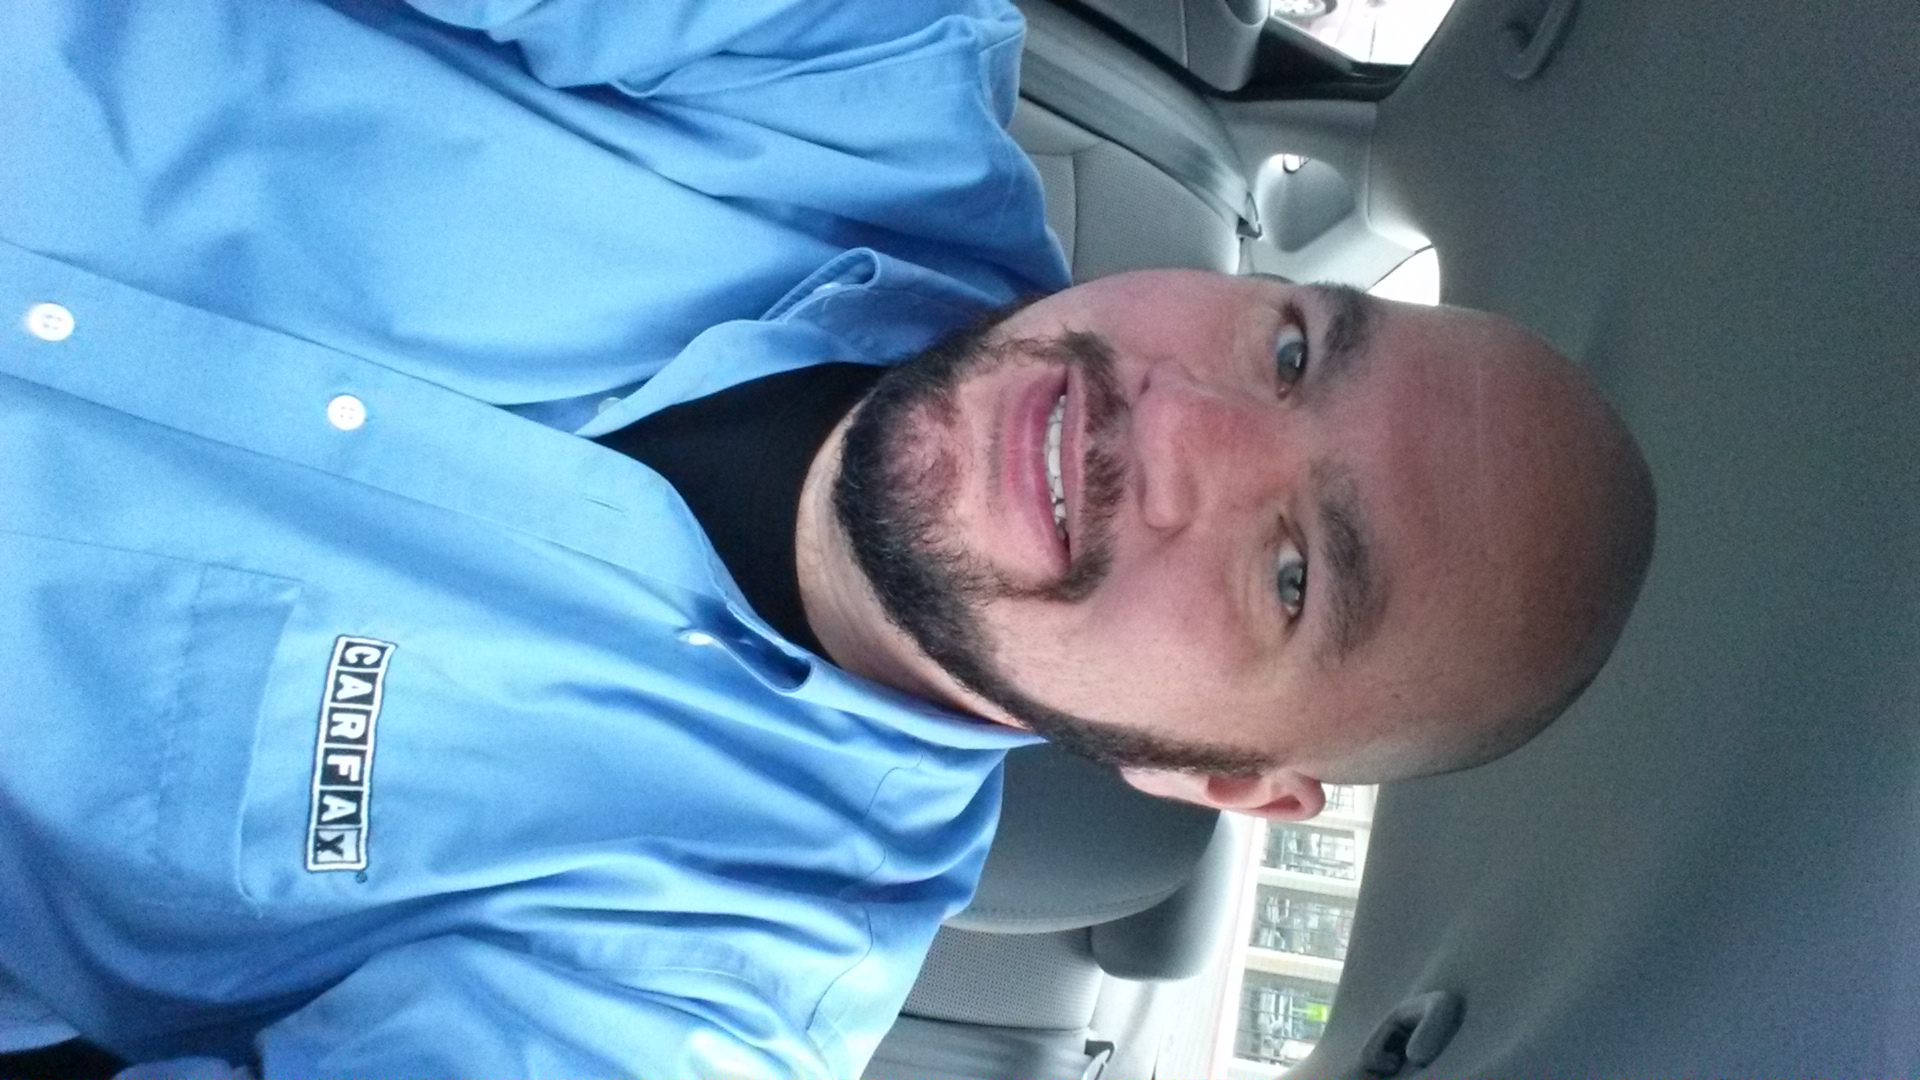 bald man in blue shirt sitting in a car